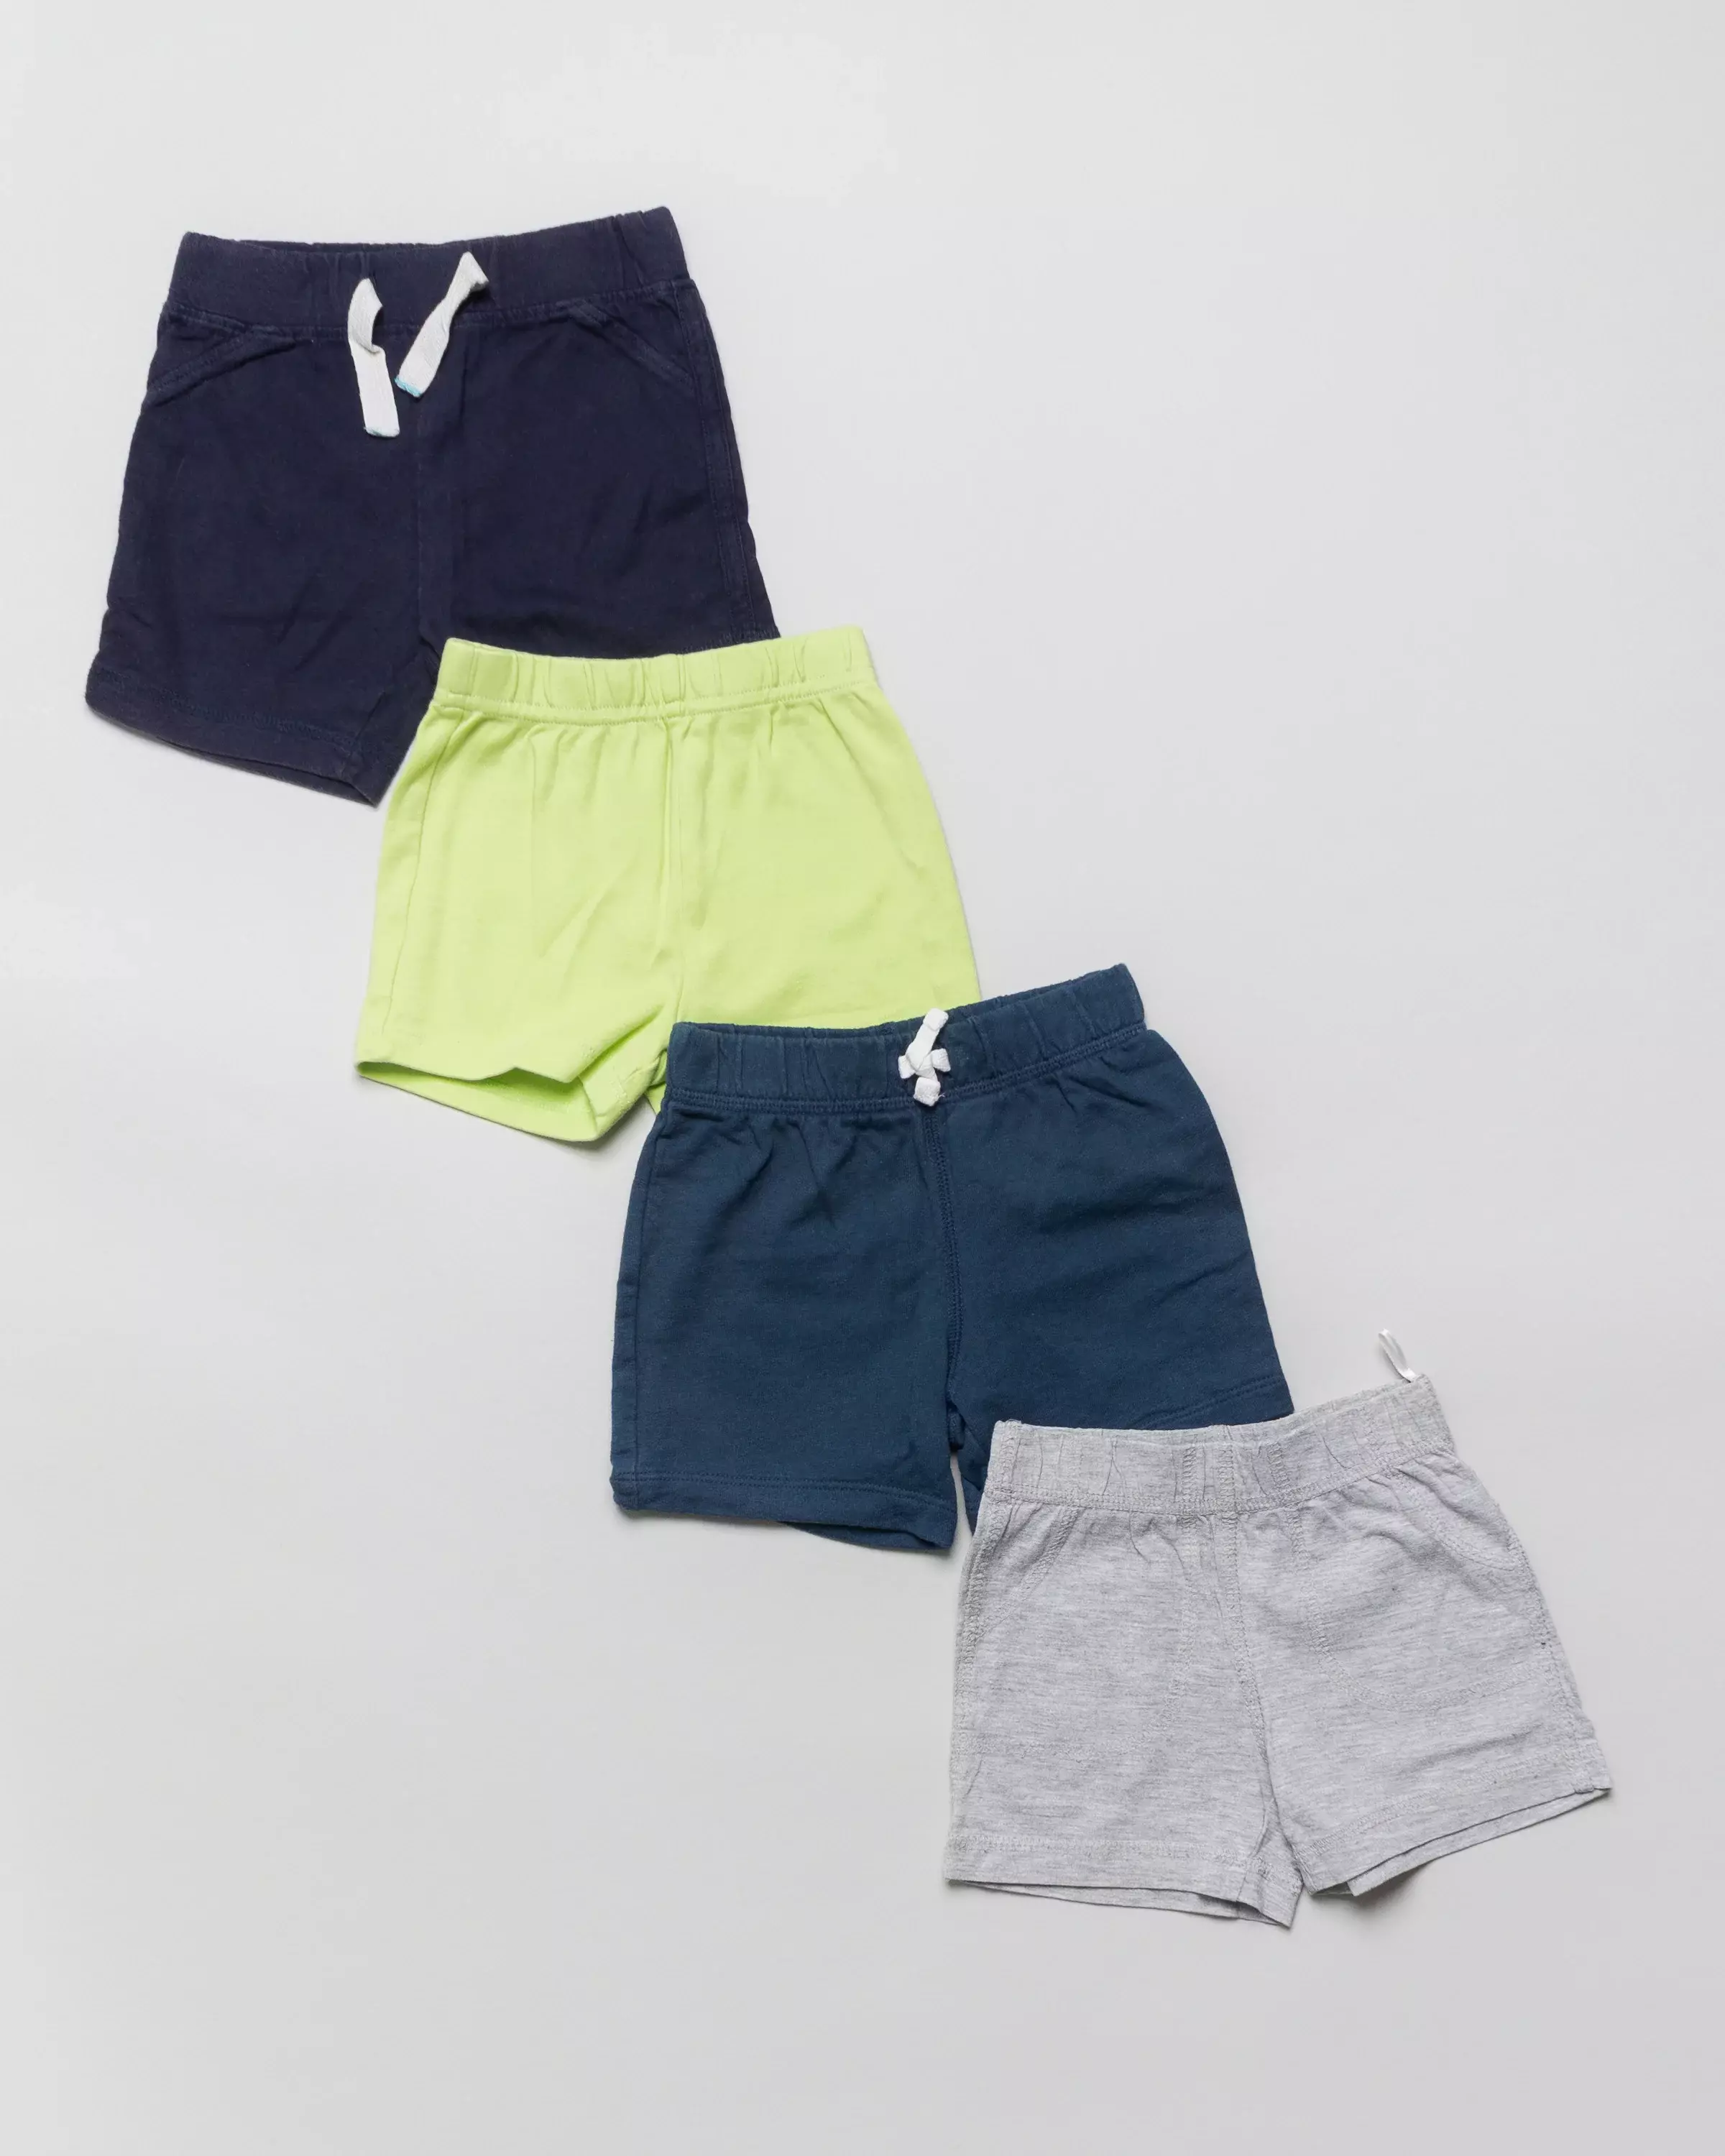 4 kurze Hosen Gr. 68 – Shorts, blau, grün, grau, sportlich, Set, Pack